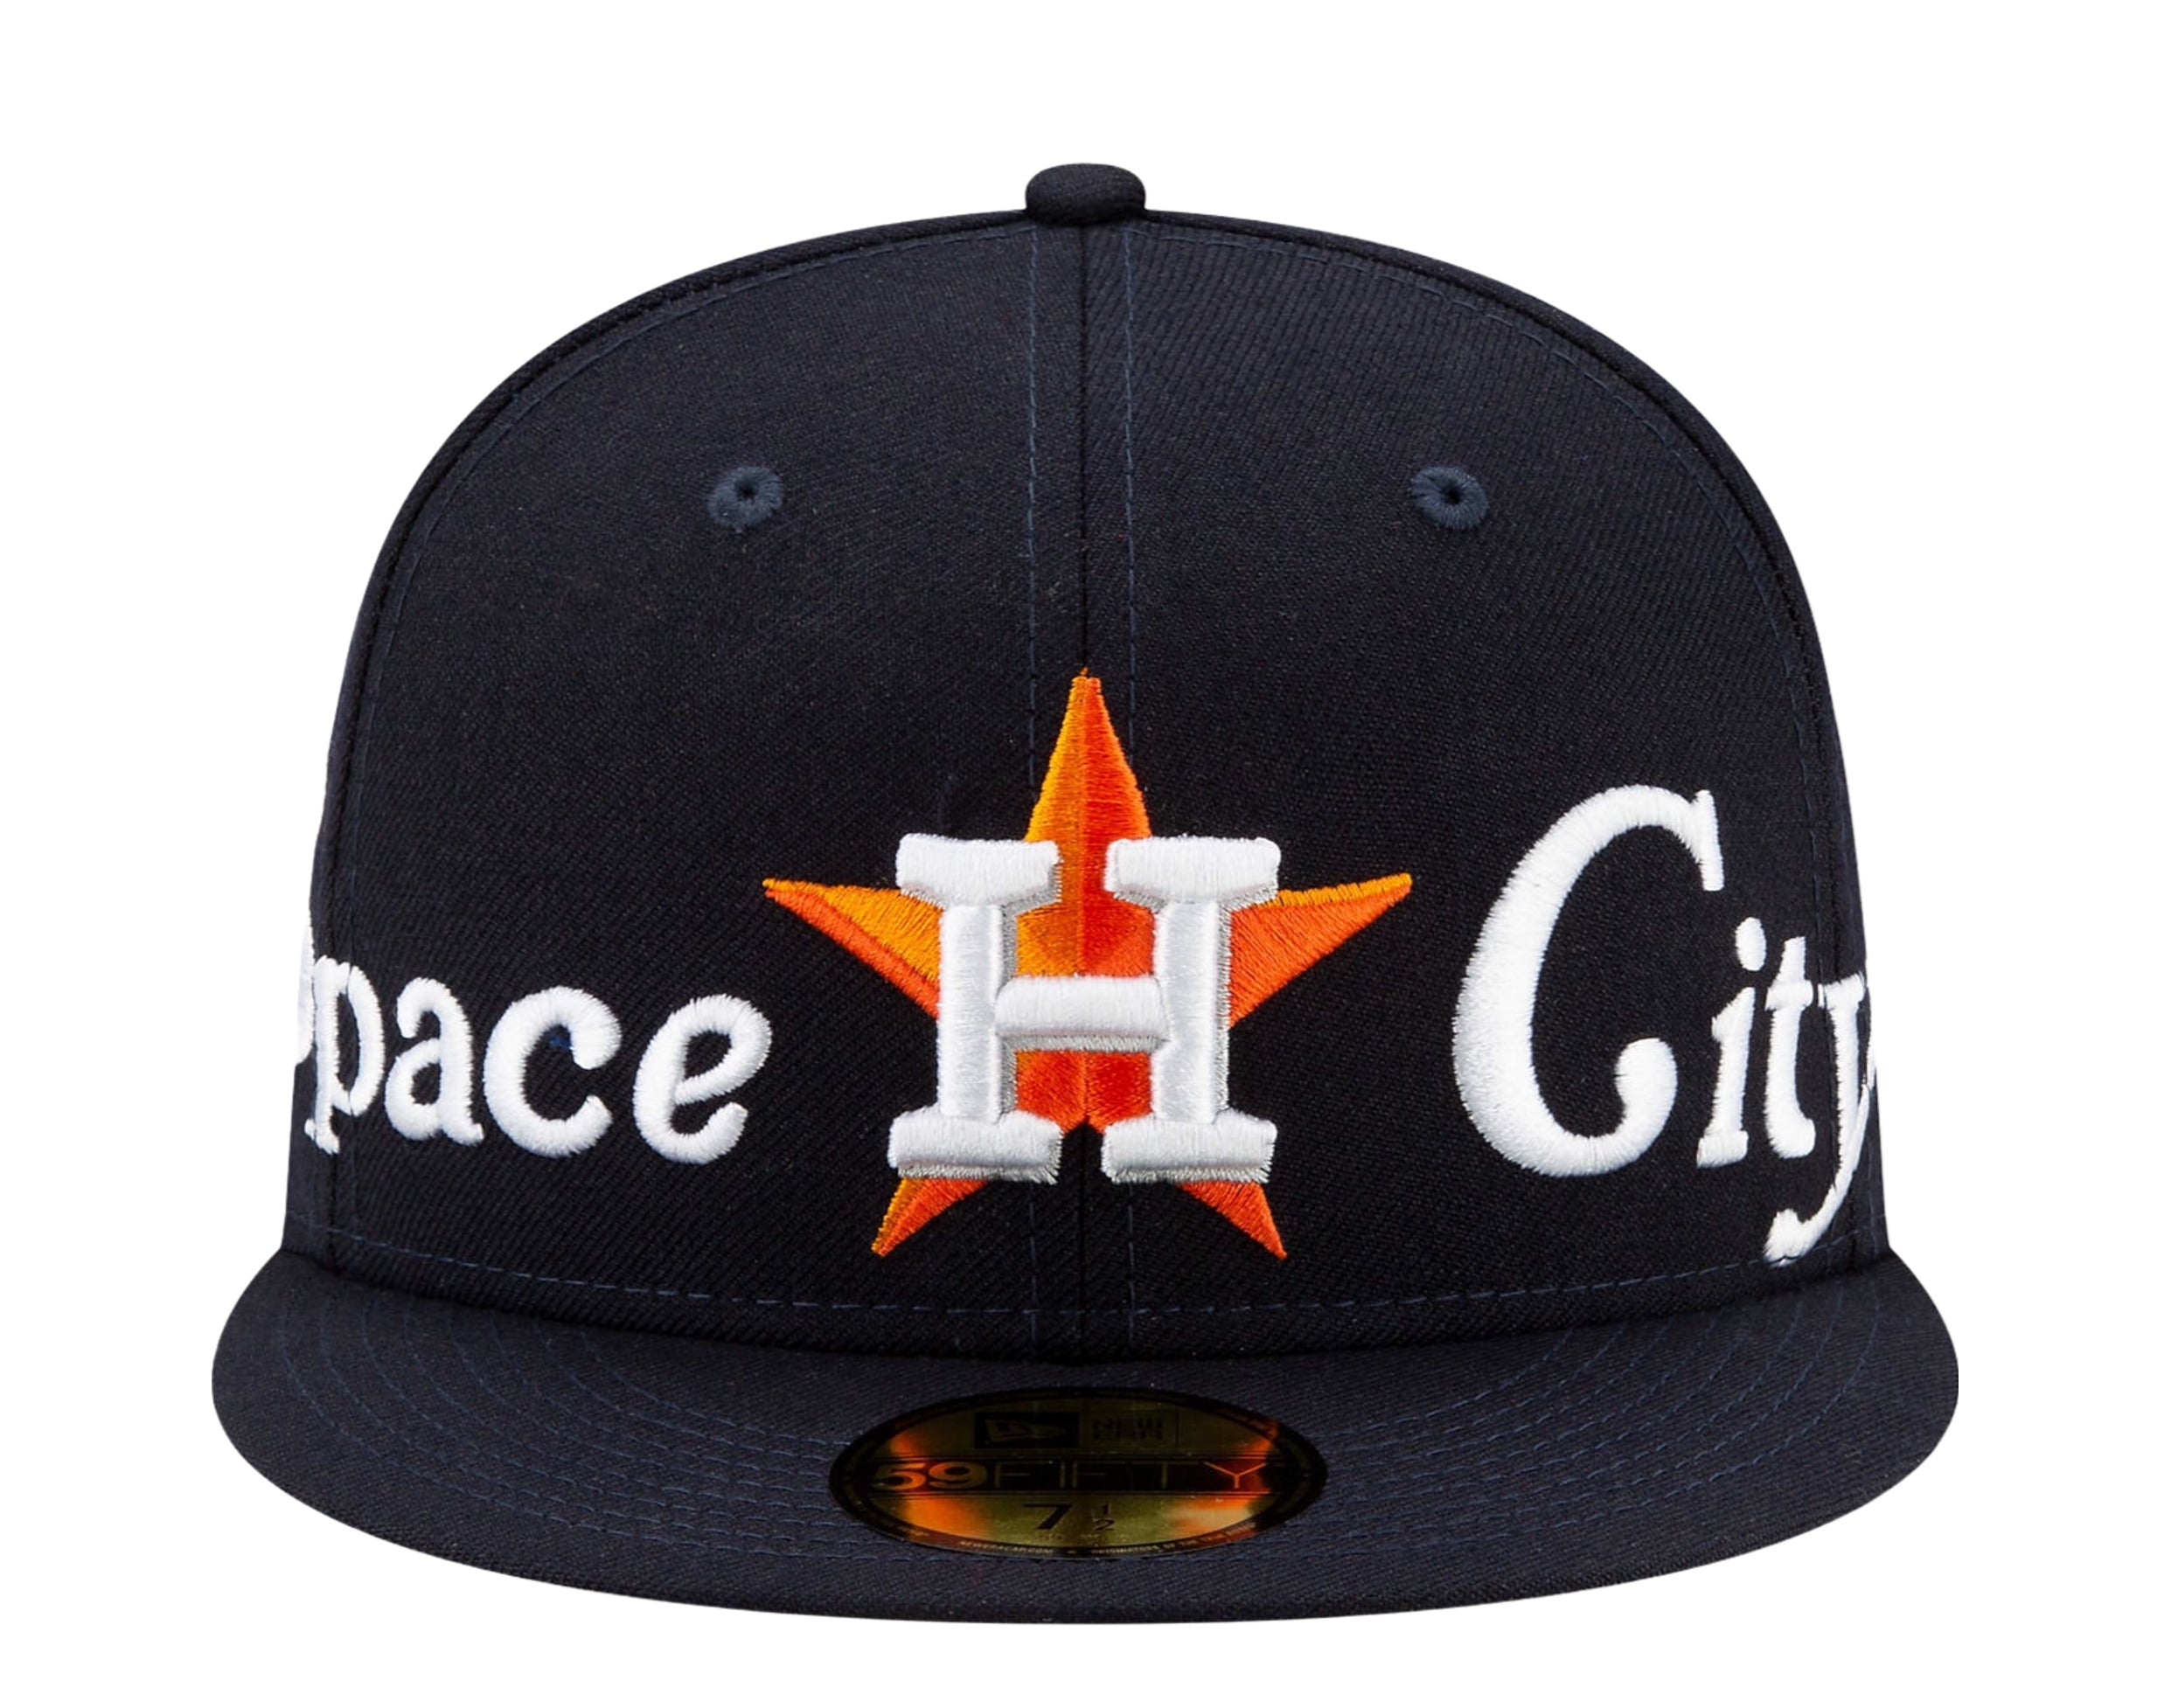 space city hat astros